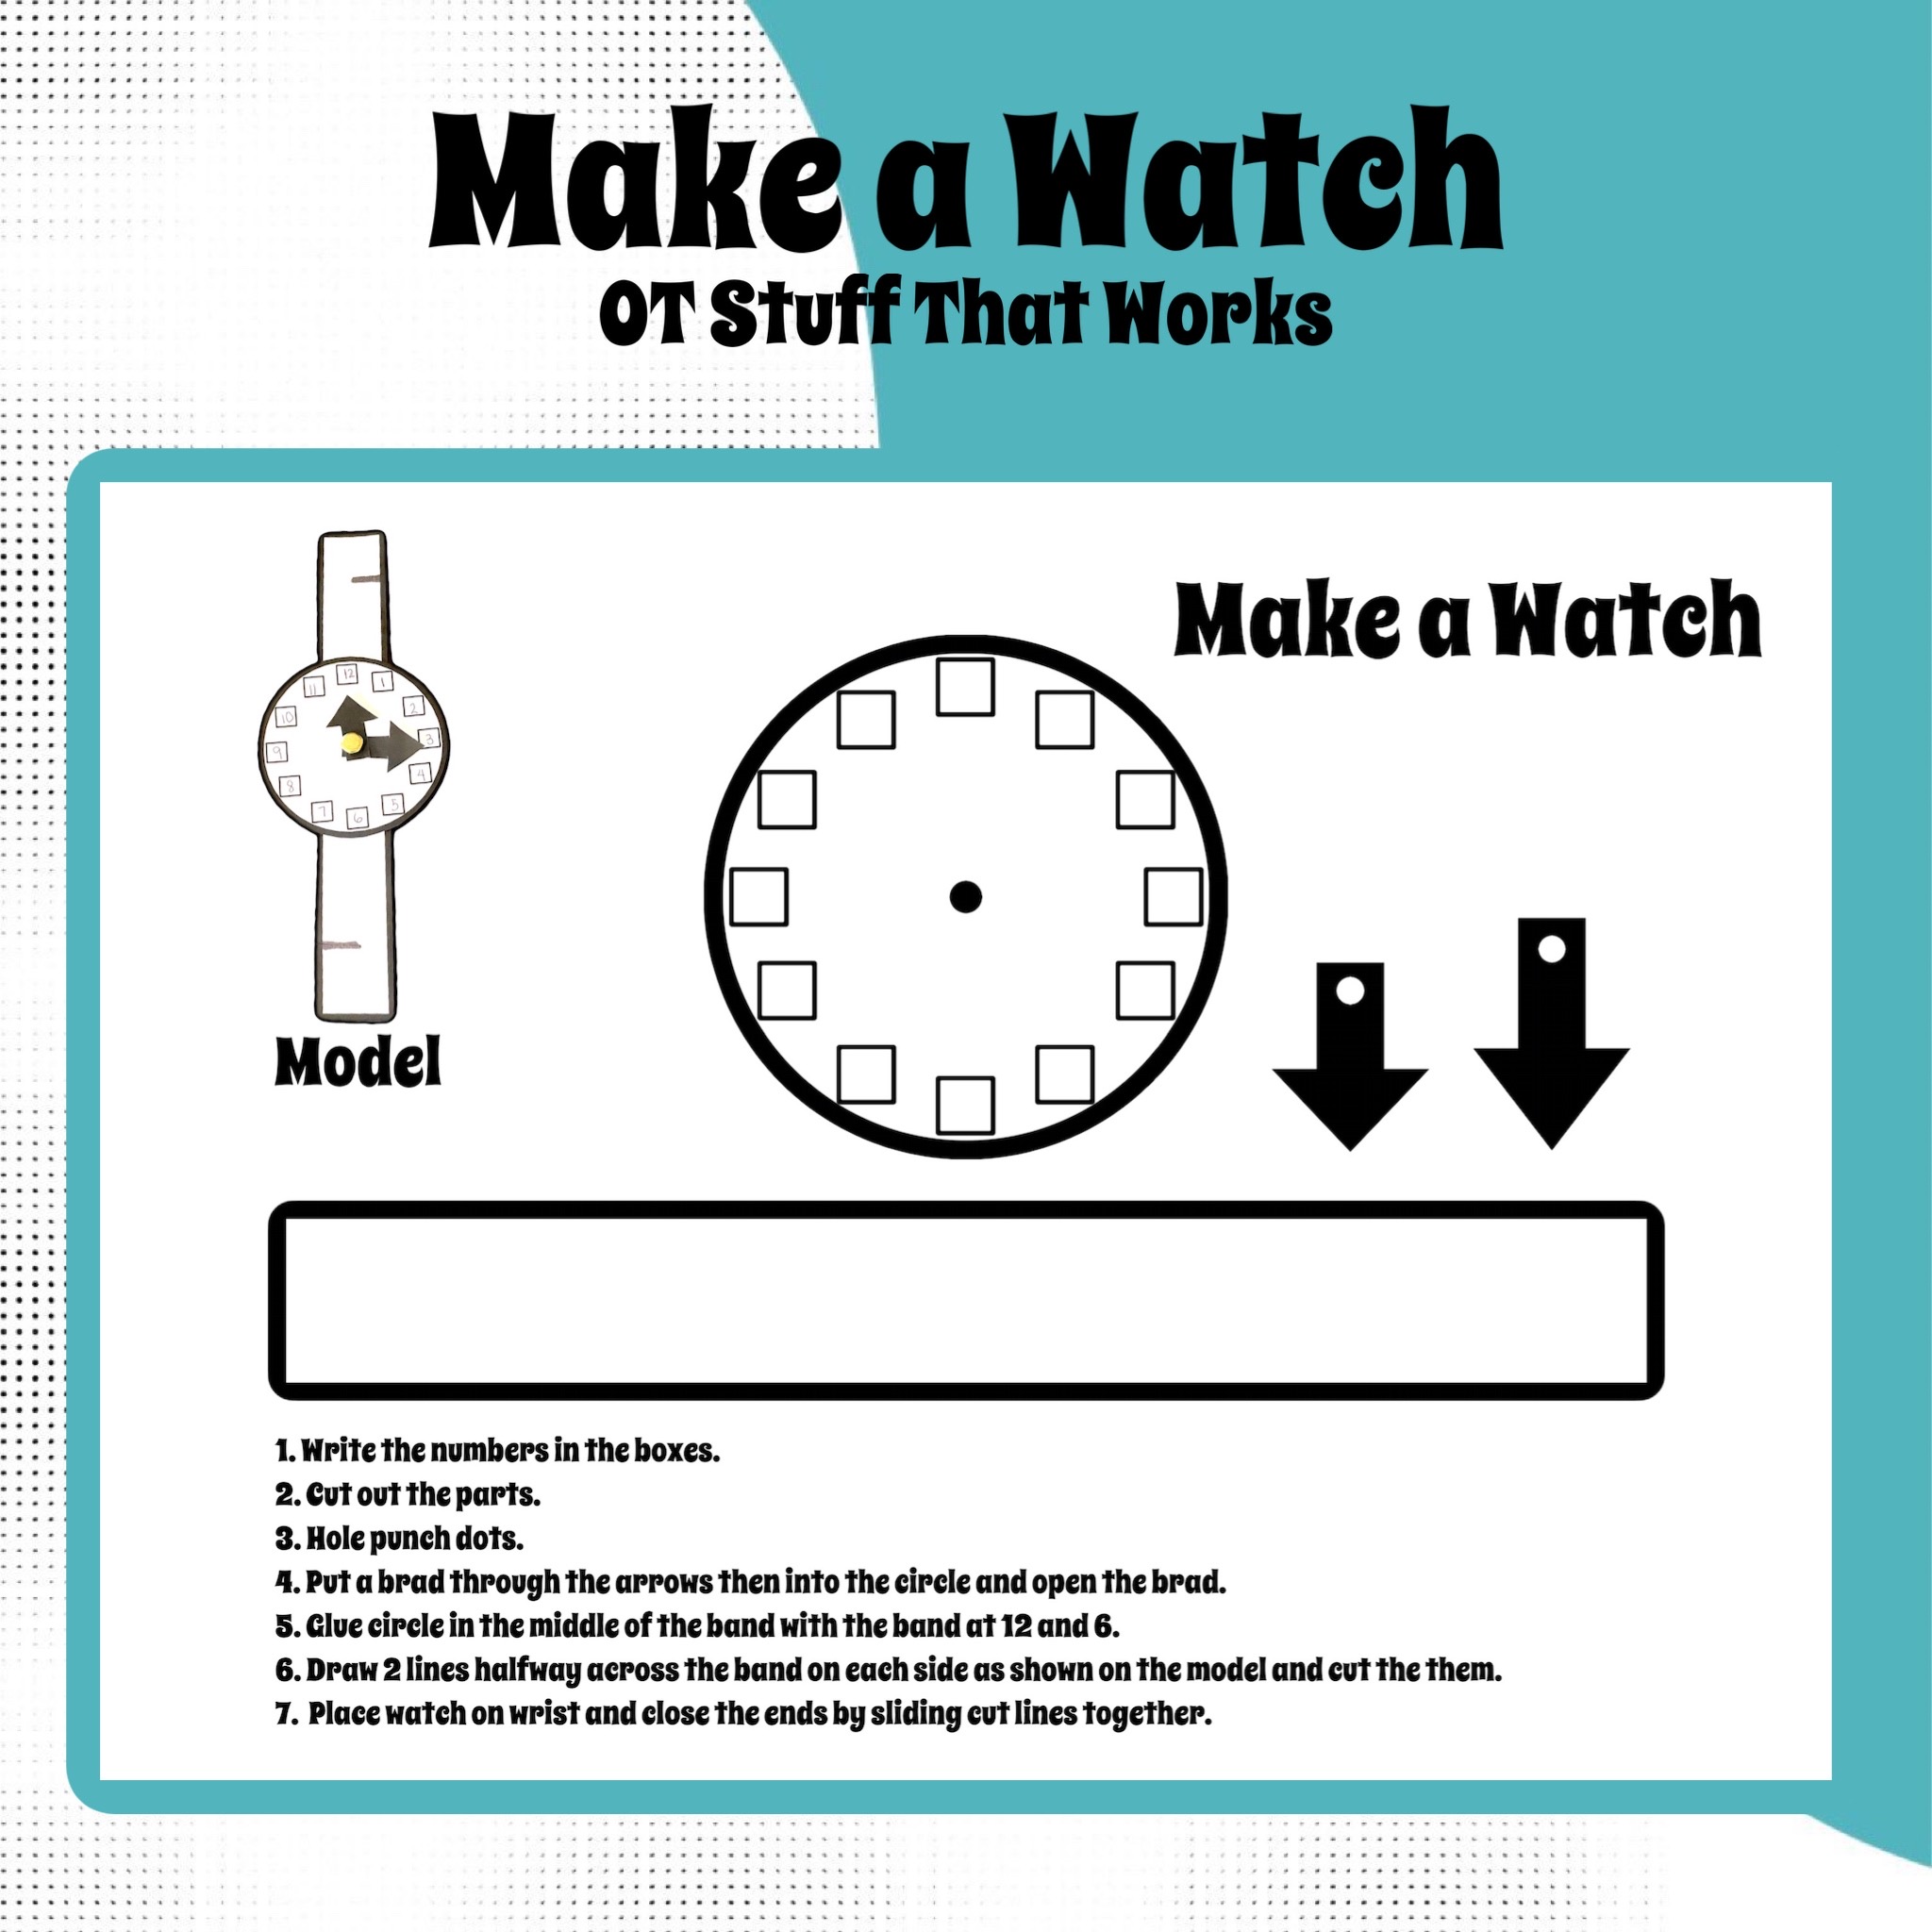 Make a Watch